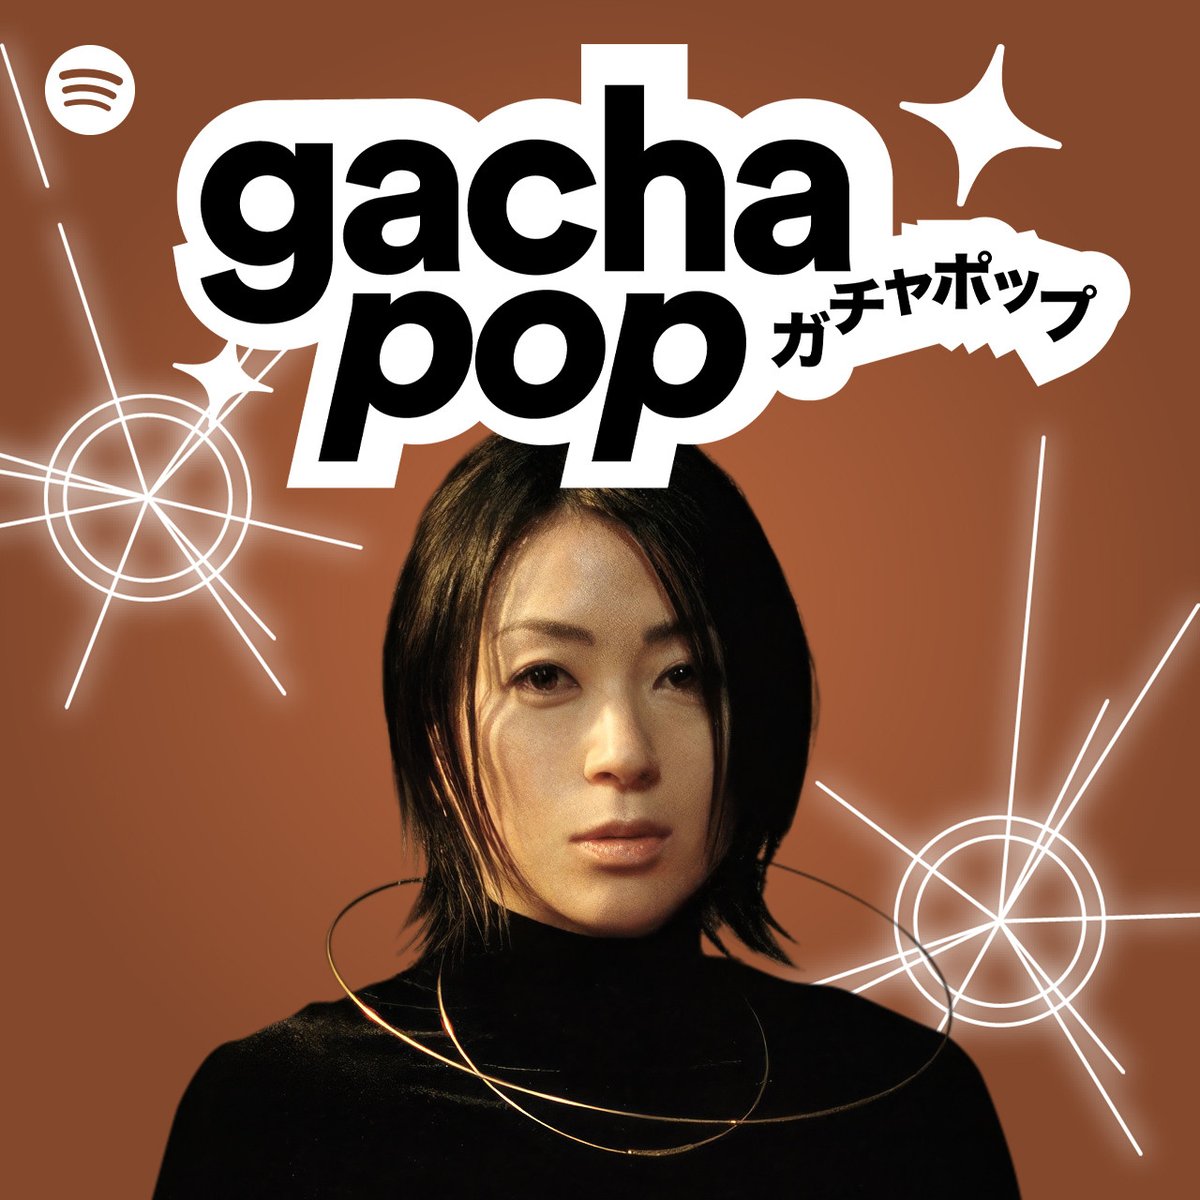 Spotify's 'Gacha Pop' Playlist Plays on Japanese Music's Diversity
nantejapan.com/spotifys-gacha…

@mbmelodies recently dove into the new @Spotify playlist spreading Japanese music to the world

#GachaPop #Spotify